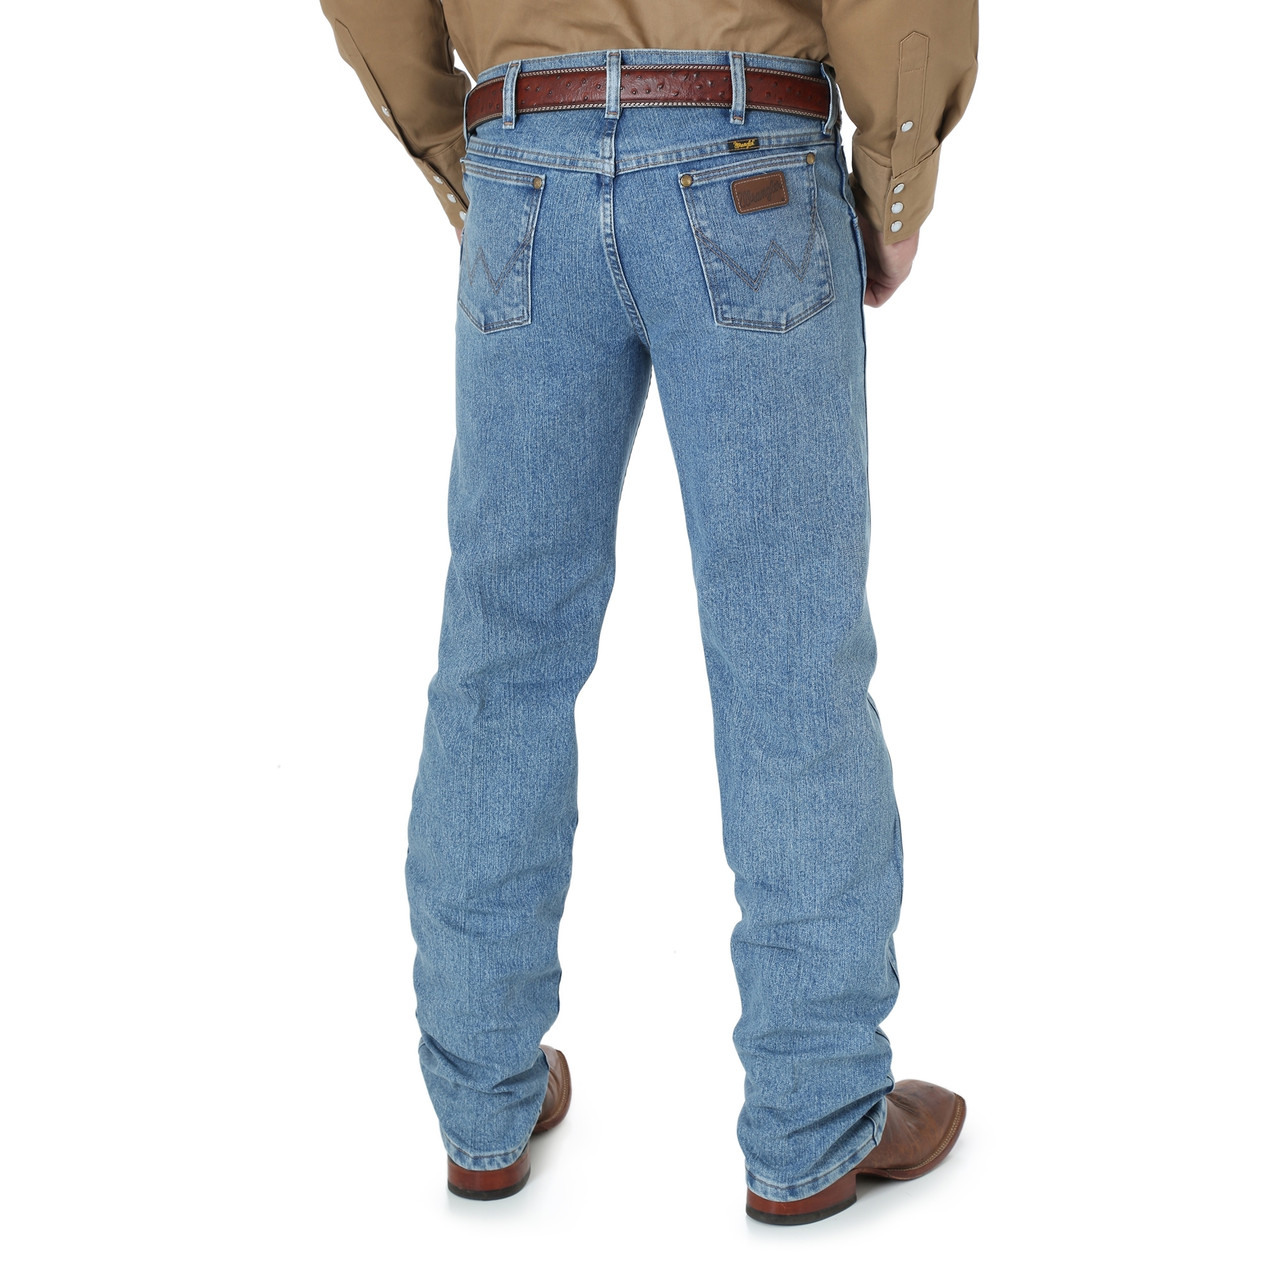 https://cdn11.bigcommerce.com/s-t1n43taf3i/images/stencil/1280x1280/products/23514/137654/Wrangler-Cowboy-Cut-Men-s-Advance-Comfort-Stone-Bleach-Jeans__S_3__61945.1645570701.jpg?c=2